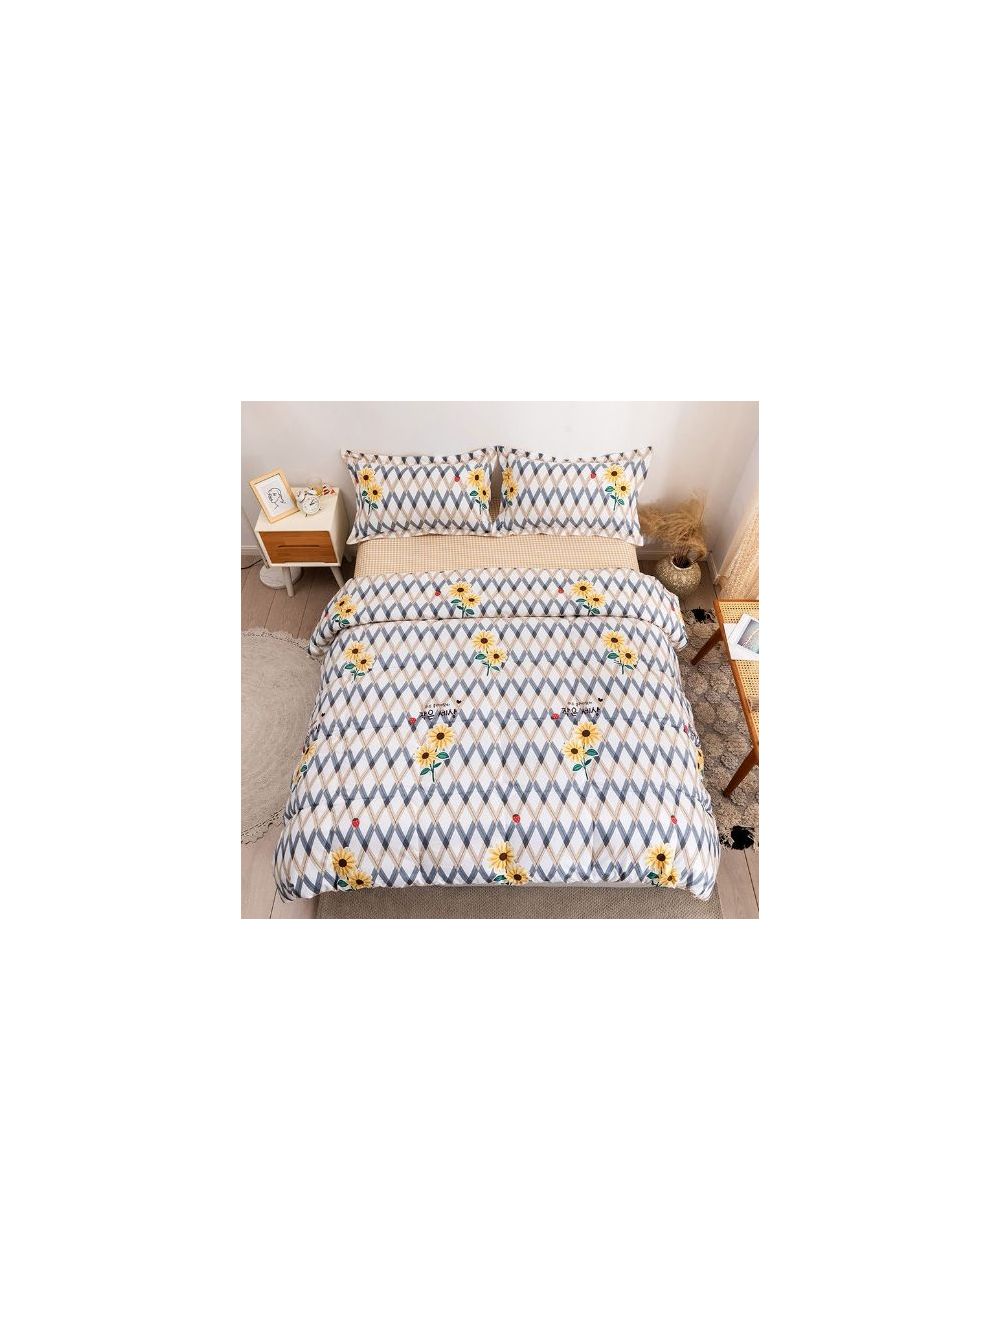 Rishahome 4 Piece Queen Size Comforter Set Microfiber Grey 210x230cm-AGRCS0004